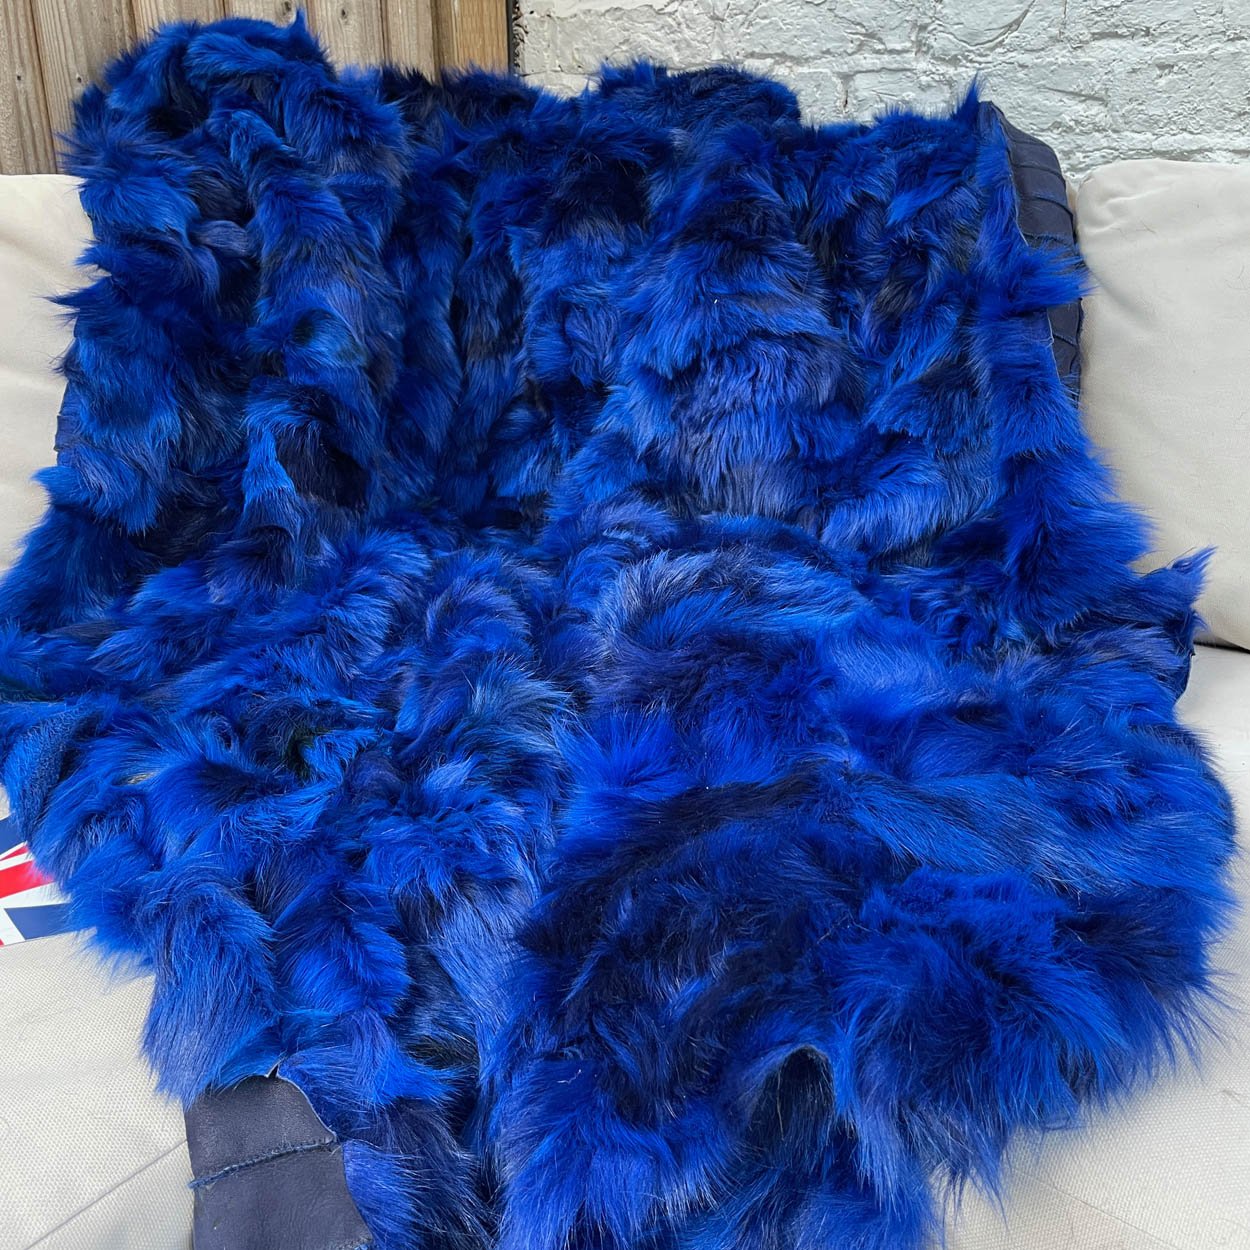 Rich Royal Blue Shearling Throw | Fur Blanket | Sheepskin Rug | JUB2206 - Wildash London